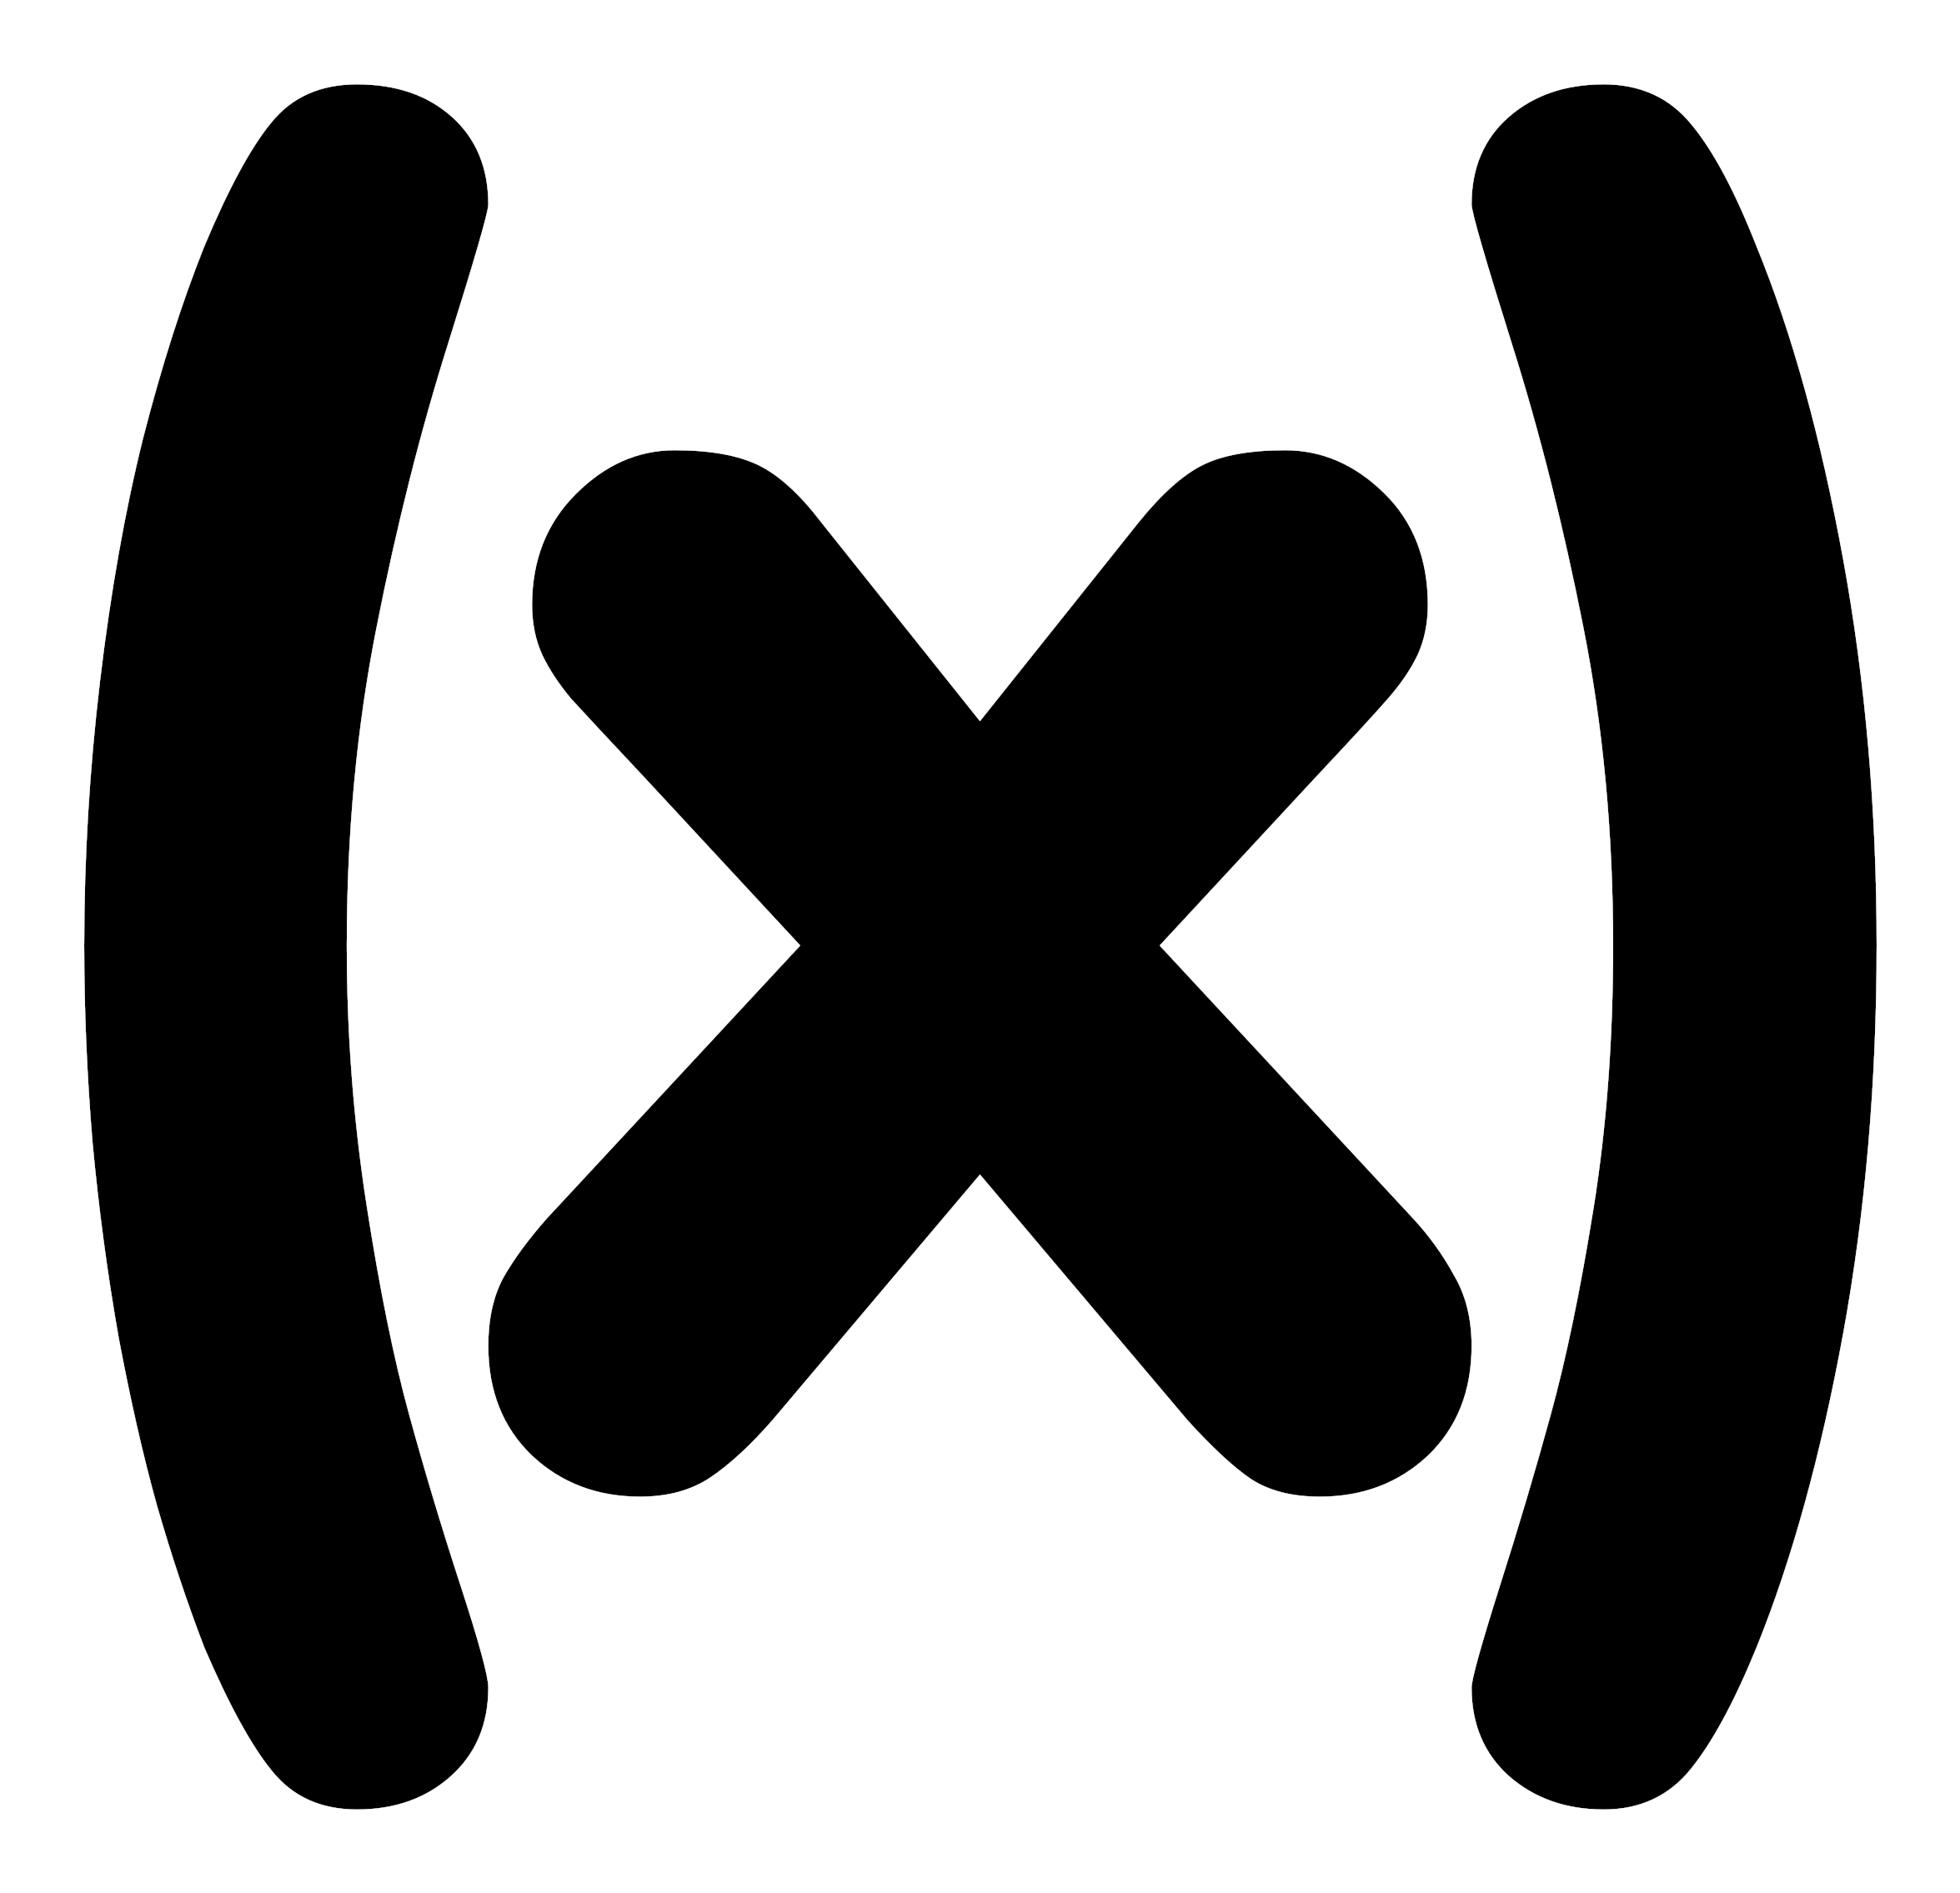 Parentheses X By A Parenthens With An X Inside - Clipart Mathematics Symbols (2400x2400)